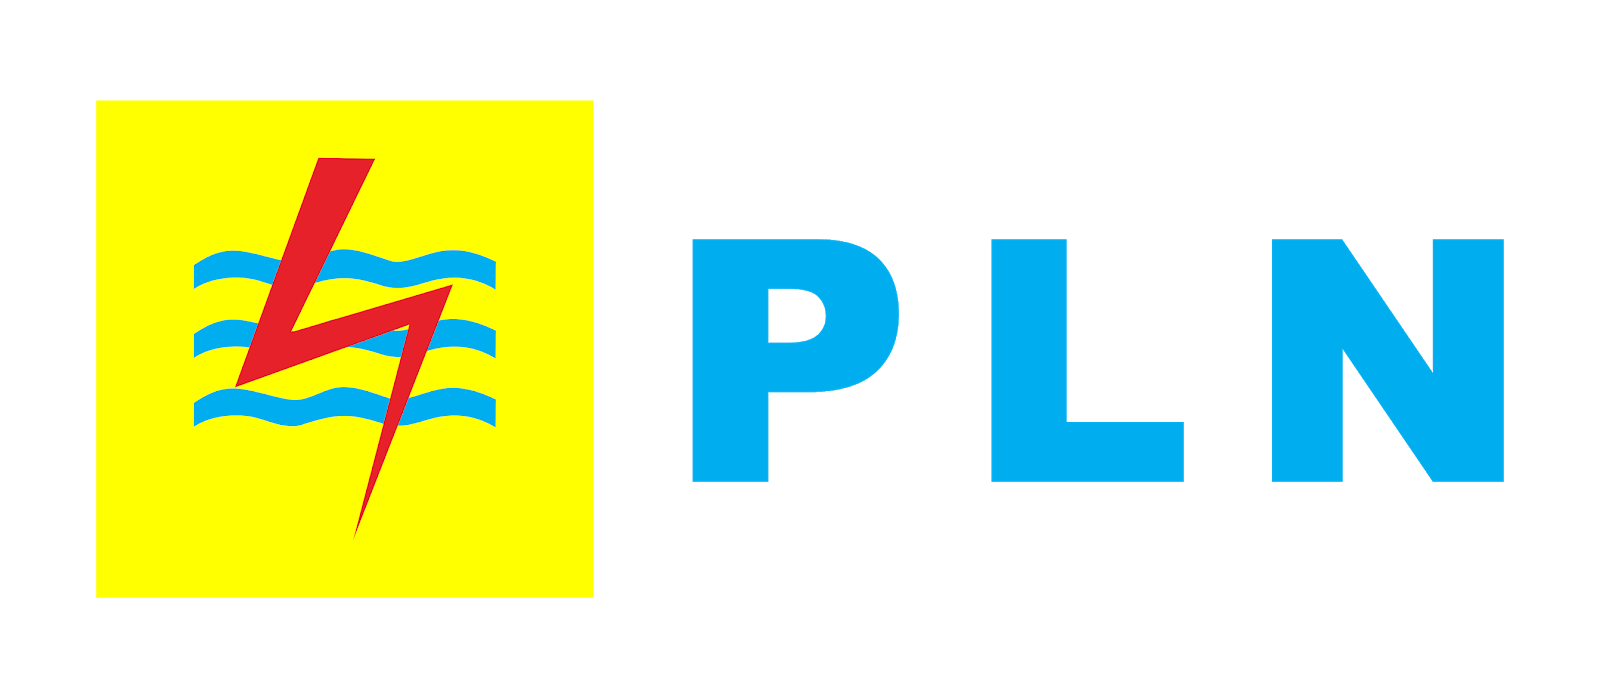 Pln : Logo PLN | Perusahaan Listrik Negara Vector cdr - Download